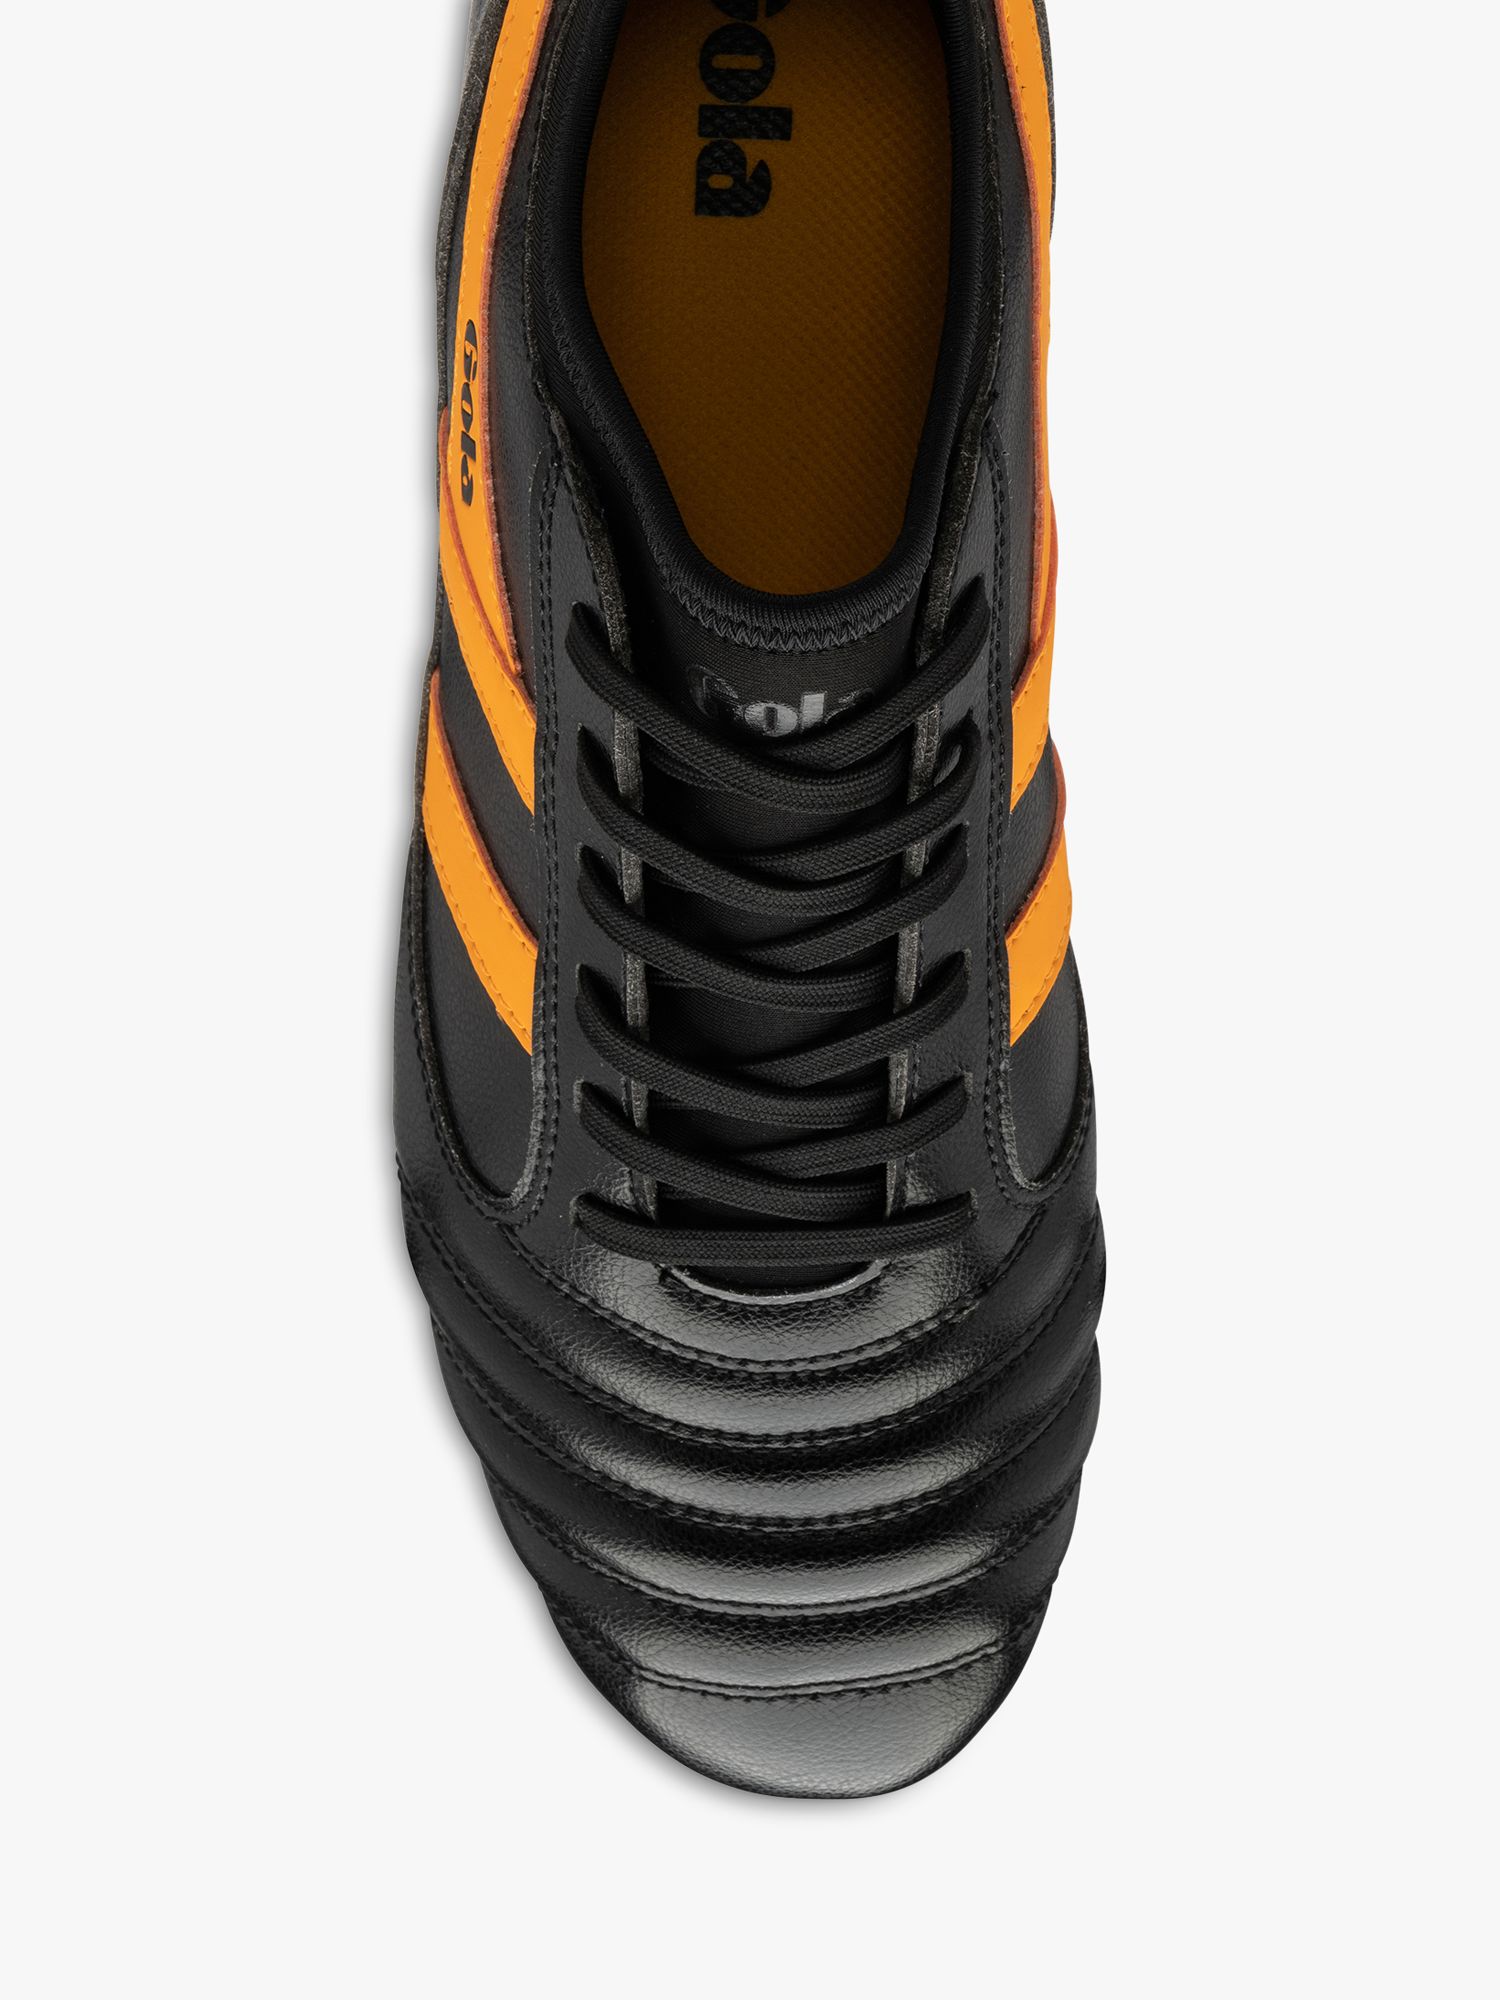 Gola Performance Ceptor MLD Pro Football Boots, Black/Sun, 11